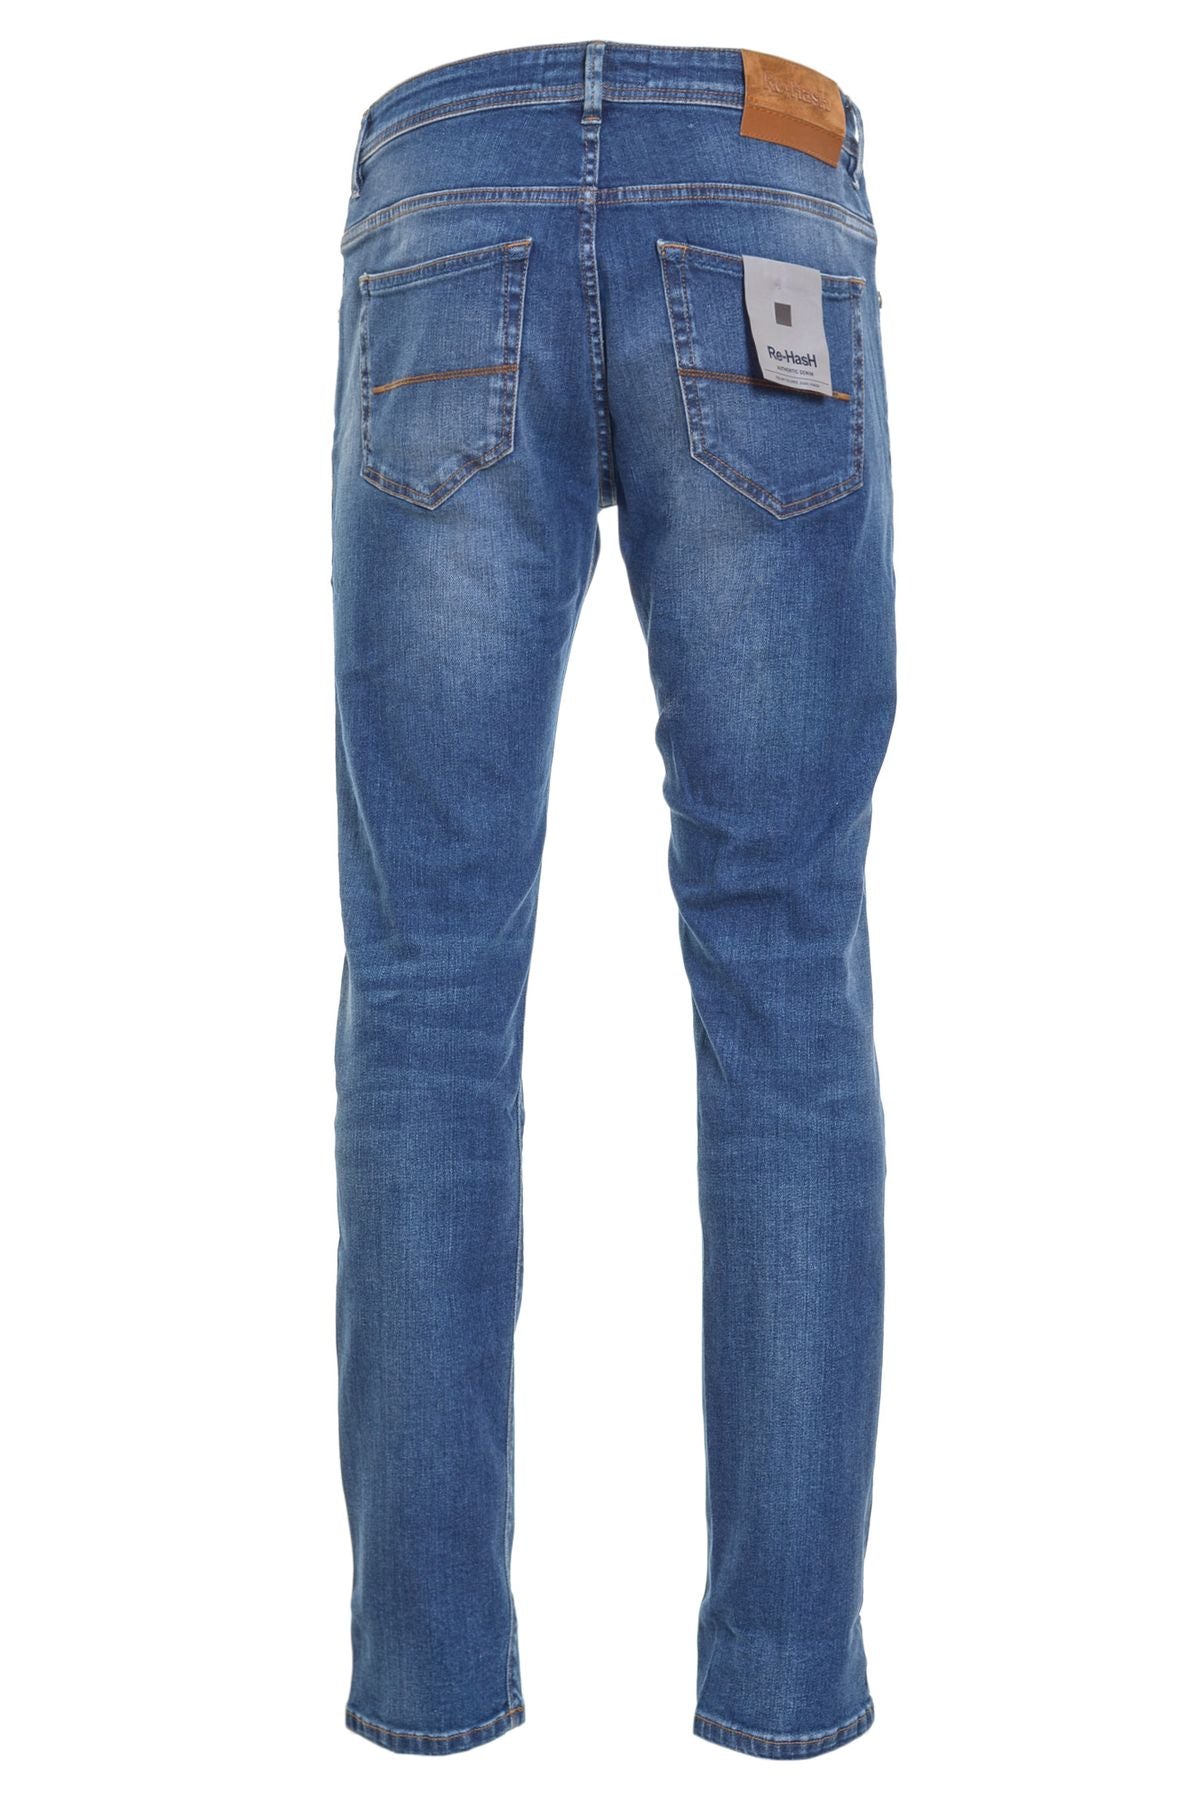 Re-HasH Jeans Autunno/Inverno pc4002730hopper